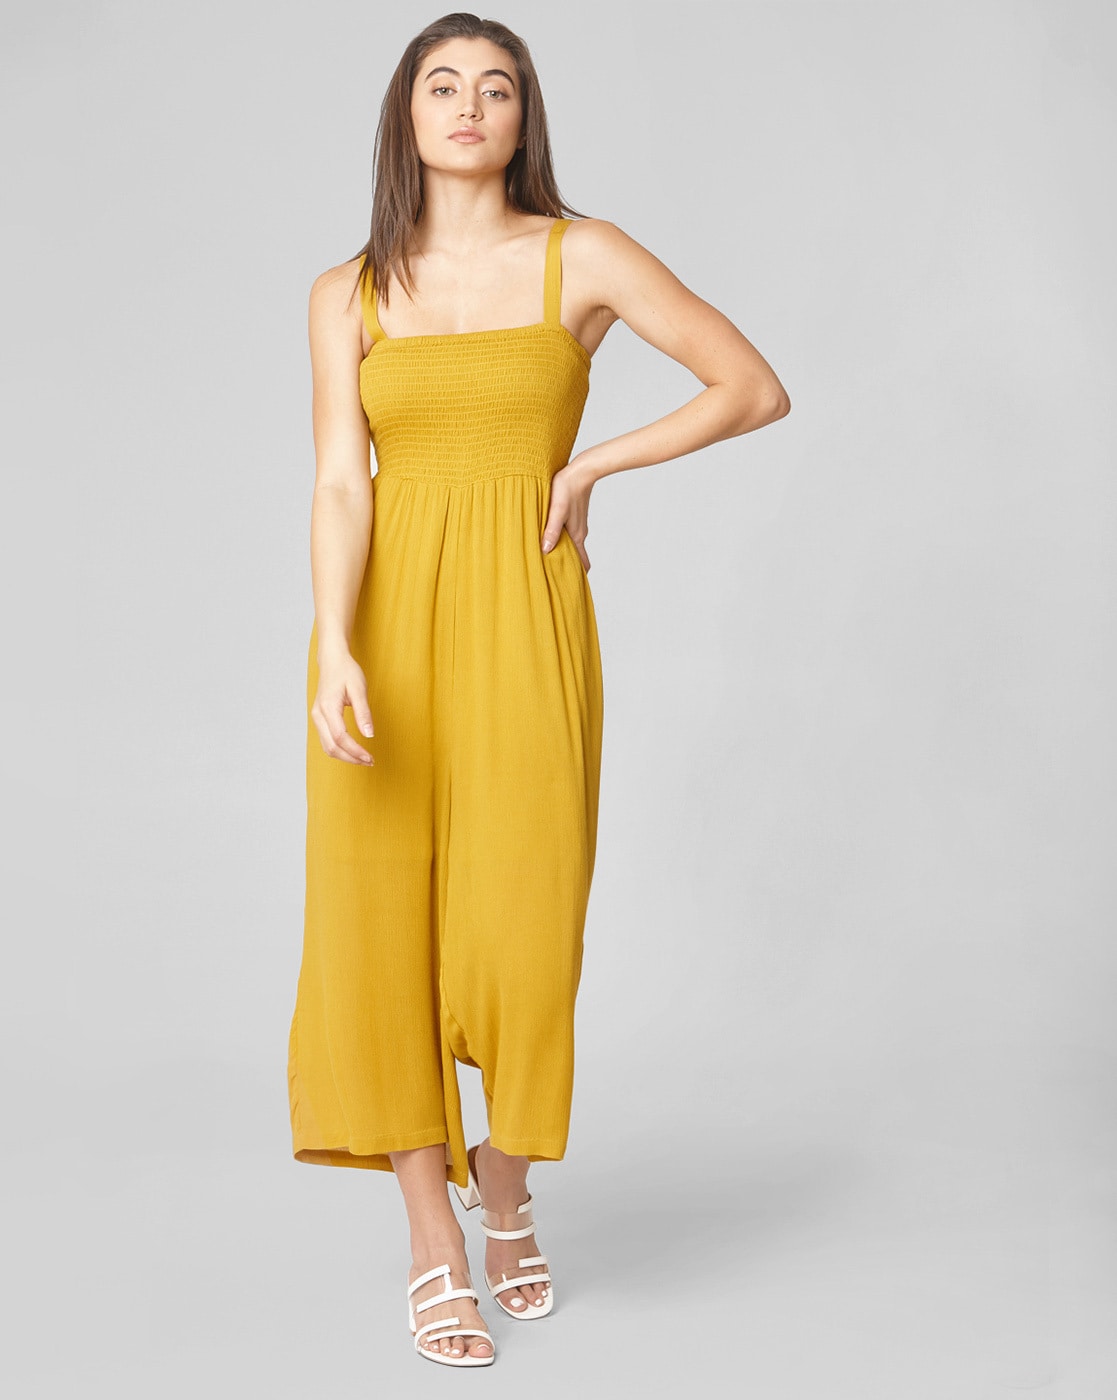 Buy Mustard Yellow &Playsuits for Women Vero Moda Online |